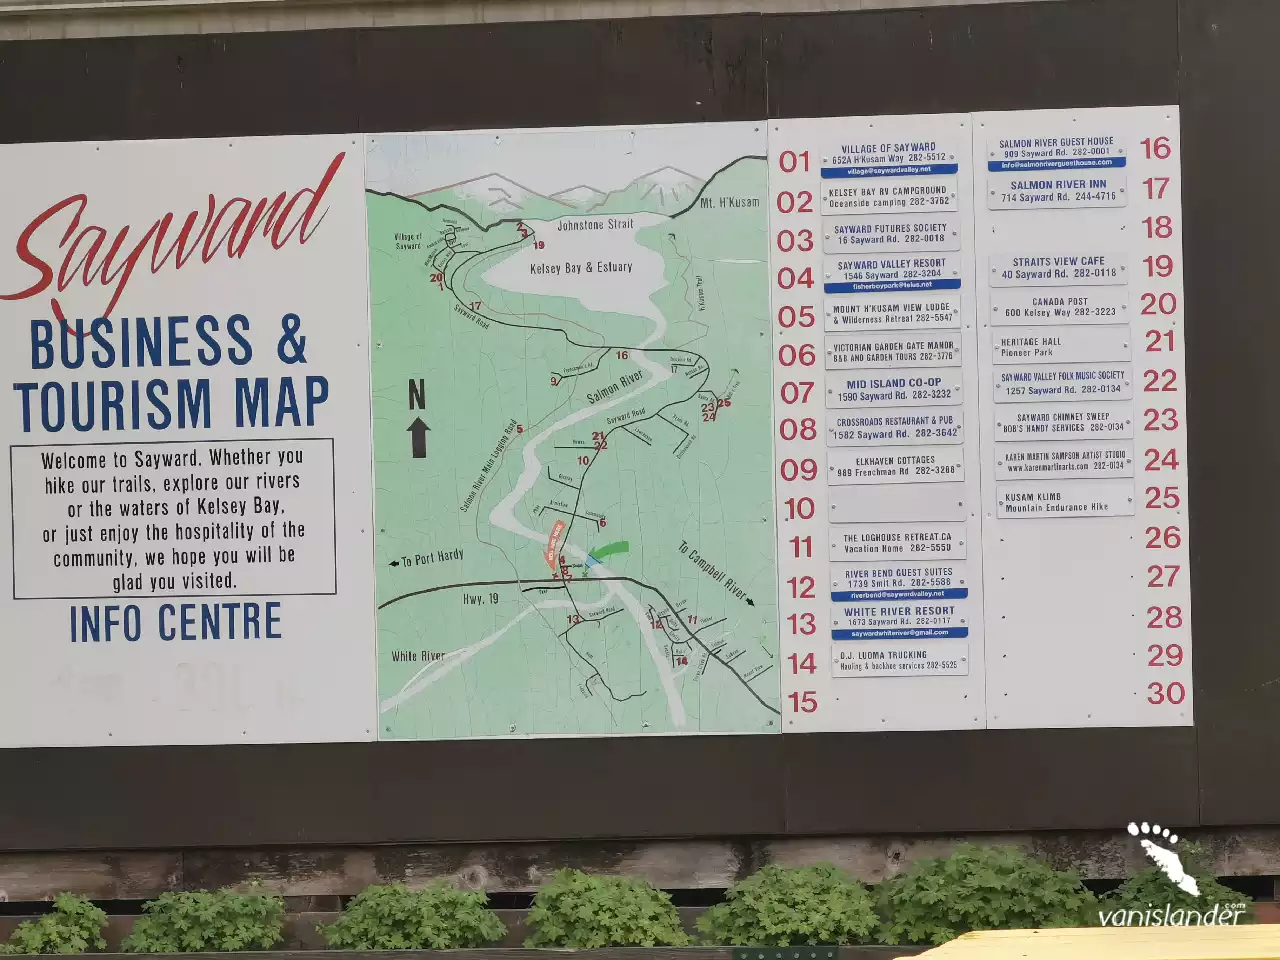 Sayward business & tourism map, Vancouver Island